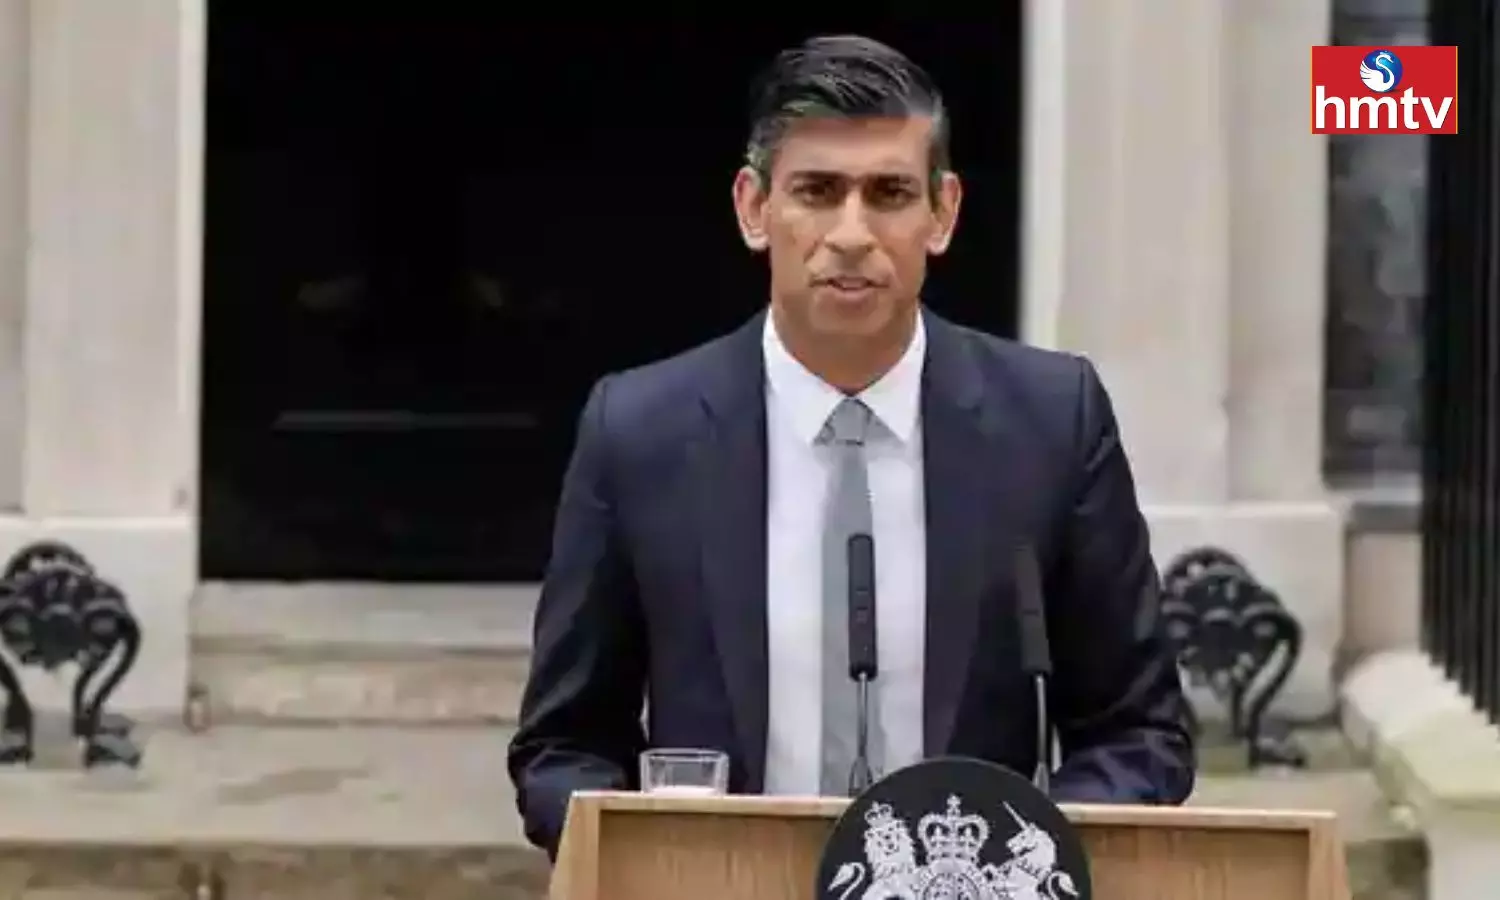 Rishi Sunaks First Speech as UK Prime Minister